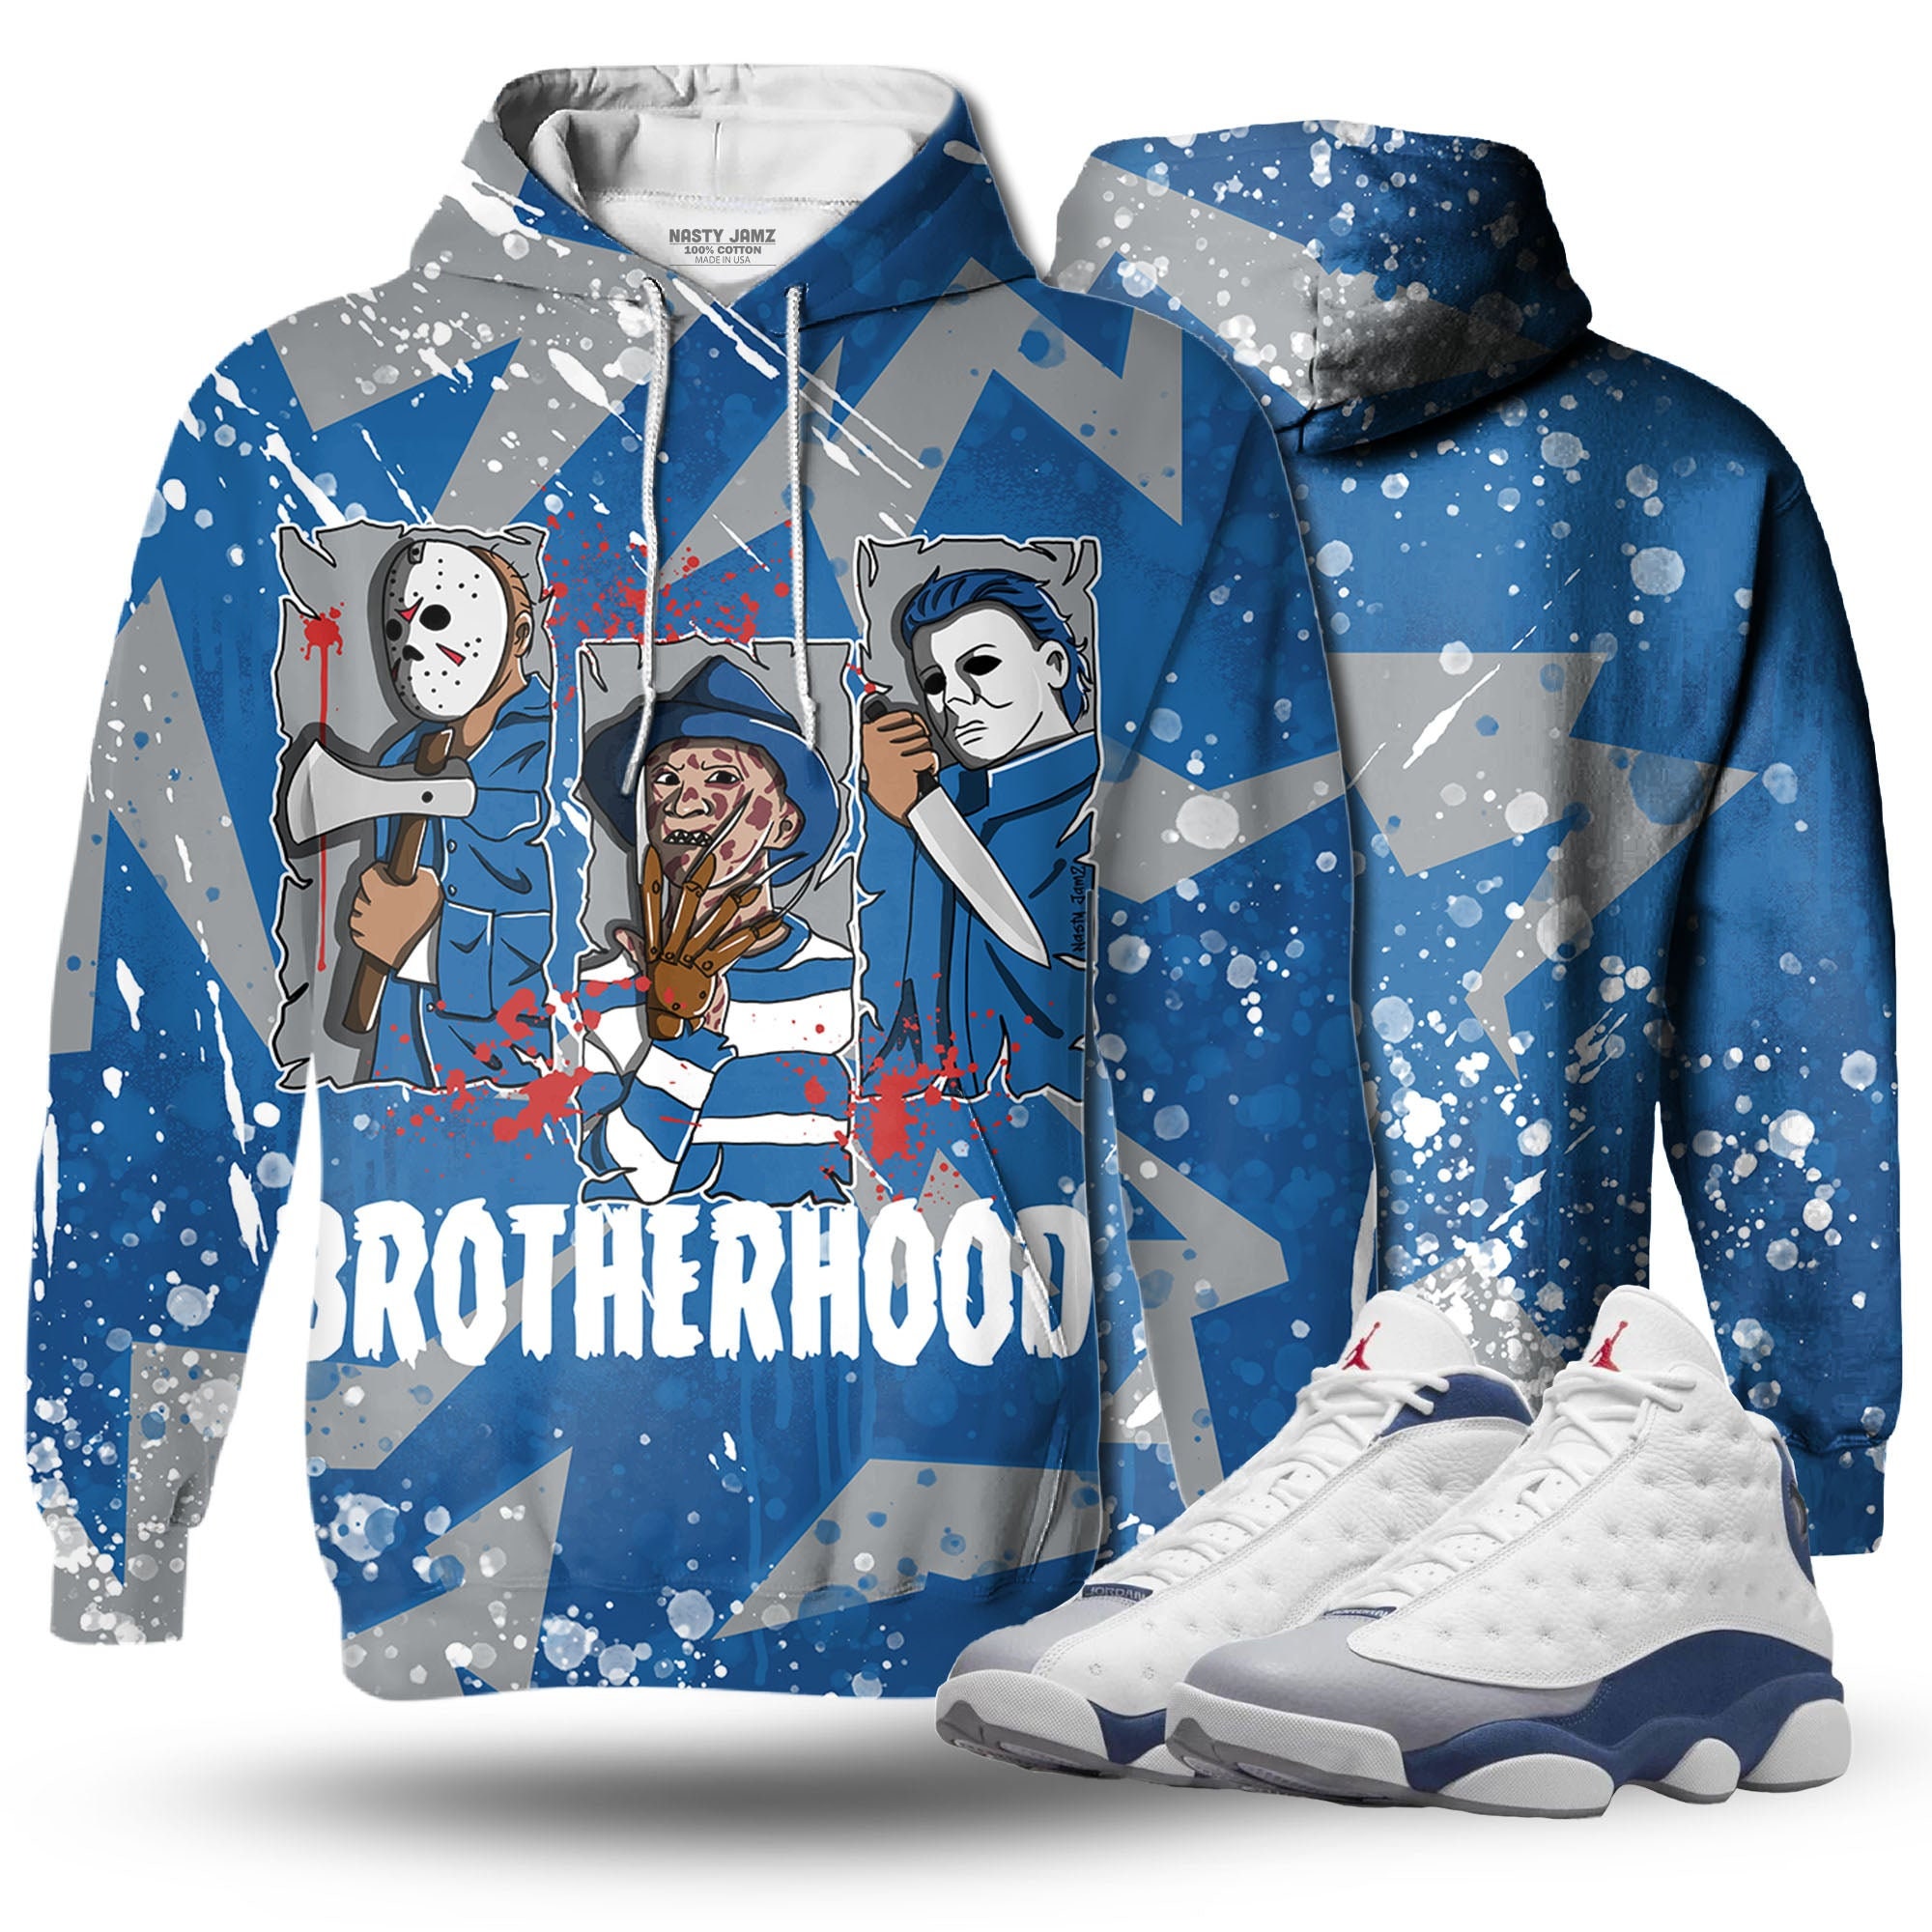 Discover Dark Brotherhood 3D Zigzag Paint Unisex matching Hoodie 3D Jordan 13 Retro French Blue outfit hoodie, oversized hoodie, sneaker match